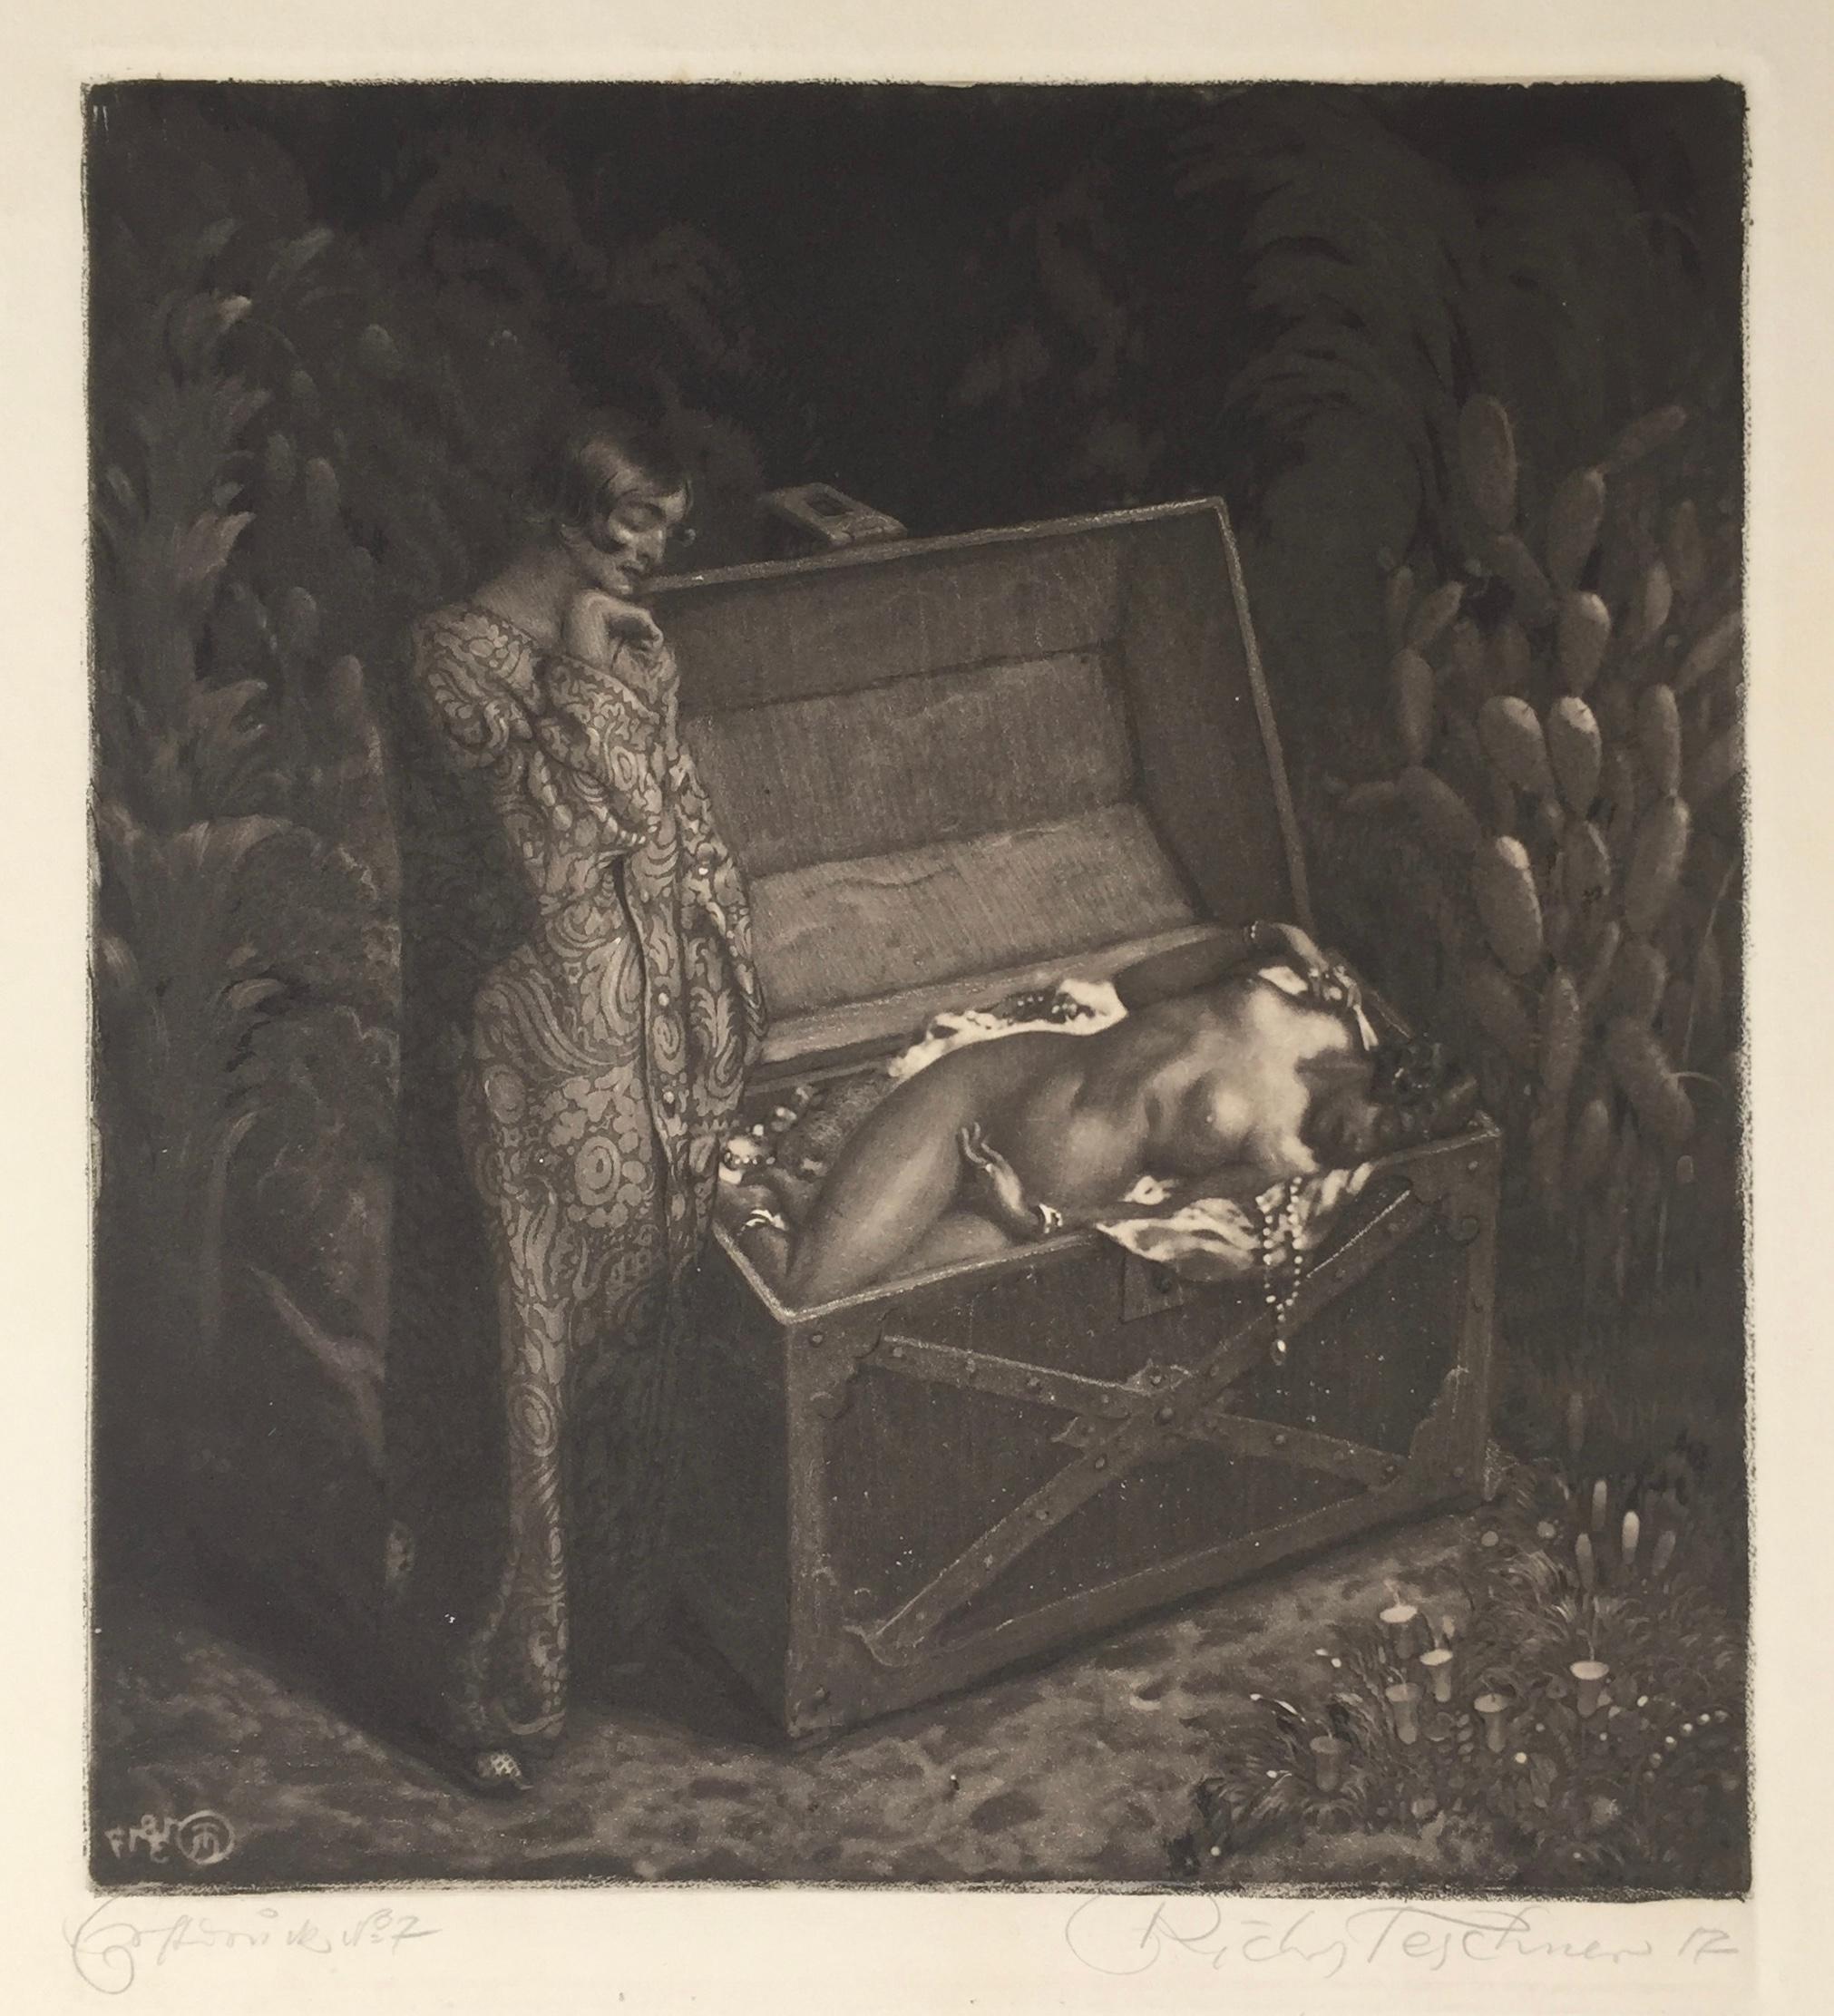 1001  Nights - SURREALIST WOMAN  DEAD IN A TREASURE BOX - Symbolist Print by Richard Teschner